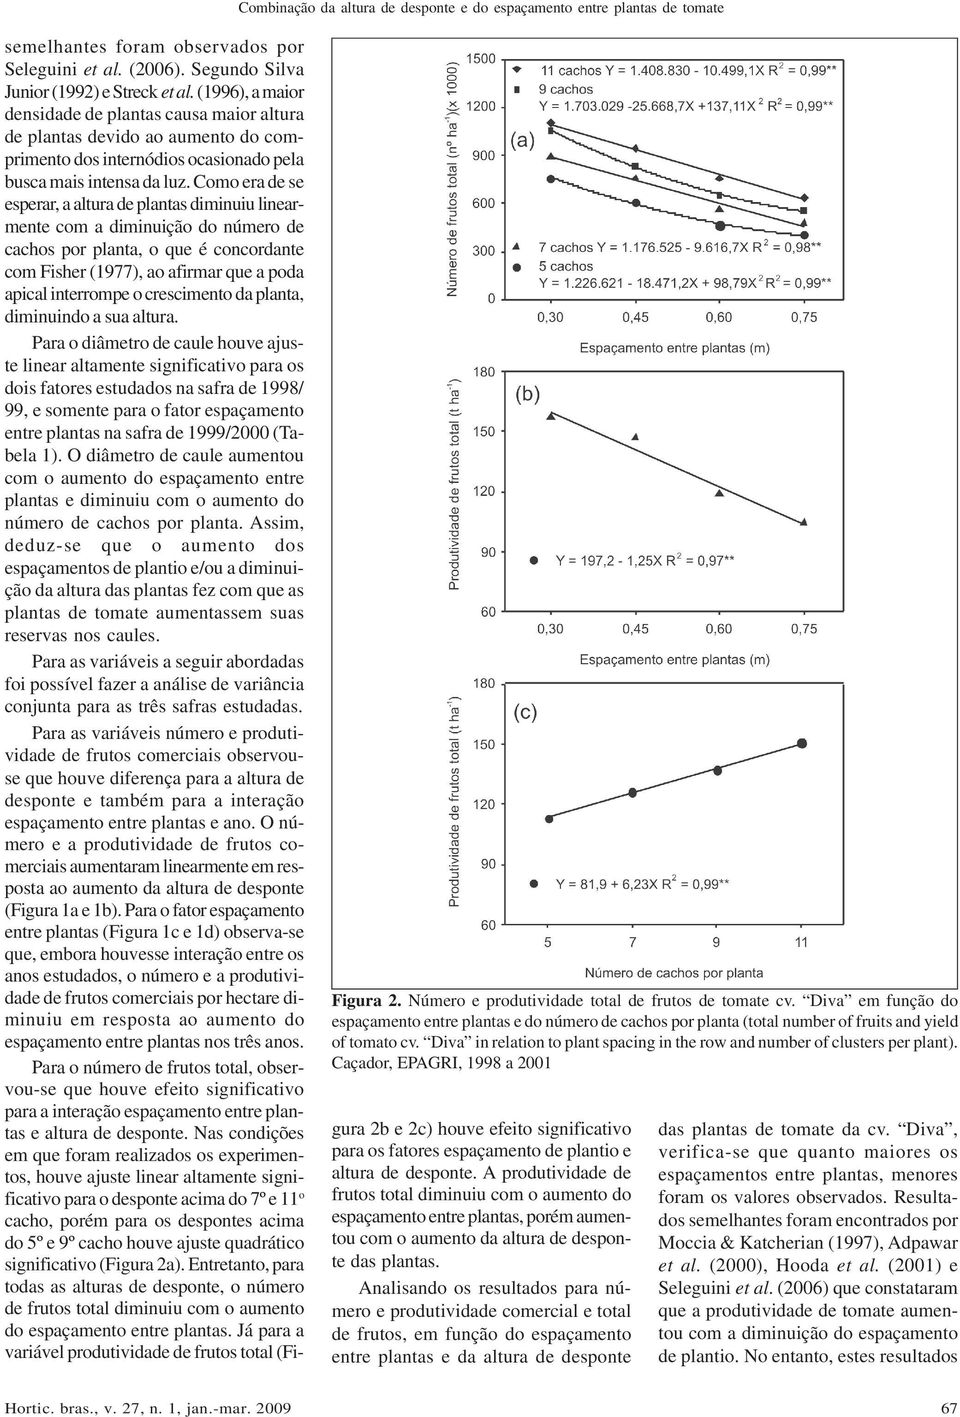 Diva in relation to plant spacing in the row and number of clusters per plant). Caçador, EPAGRI, 1998 a 2001 semelhantes foram observados por Seleguini et al. (2006).